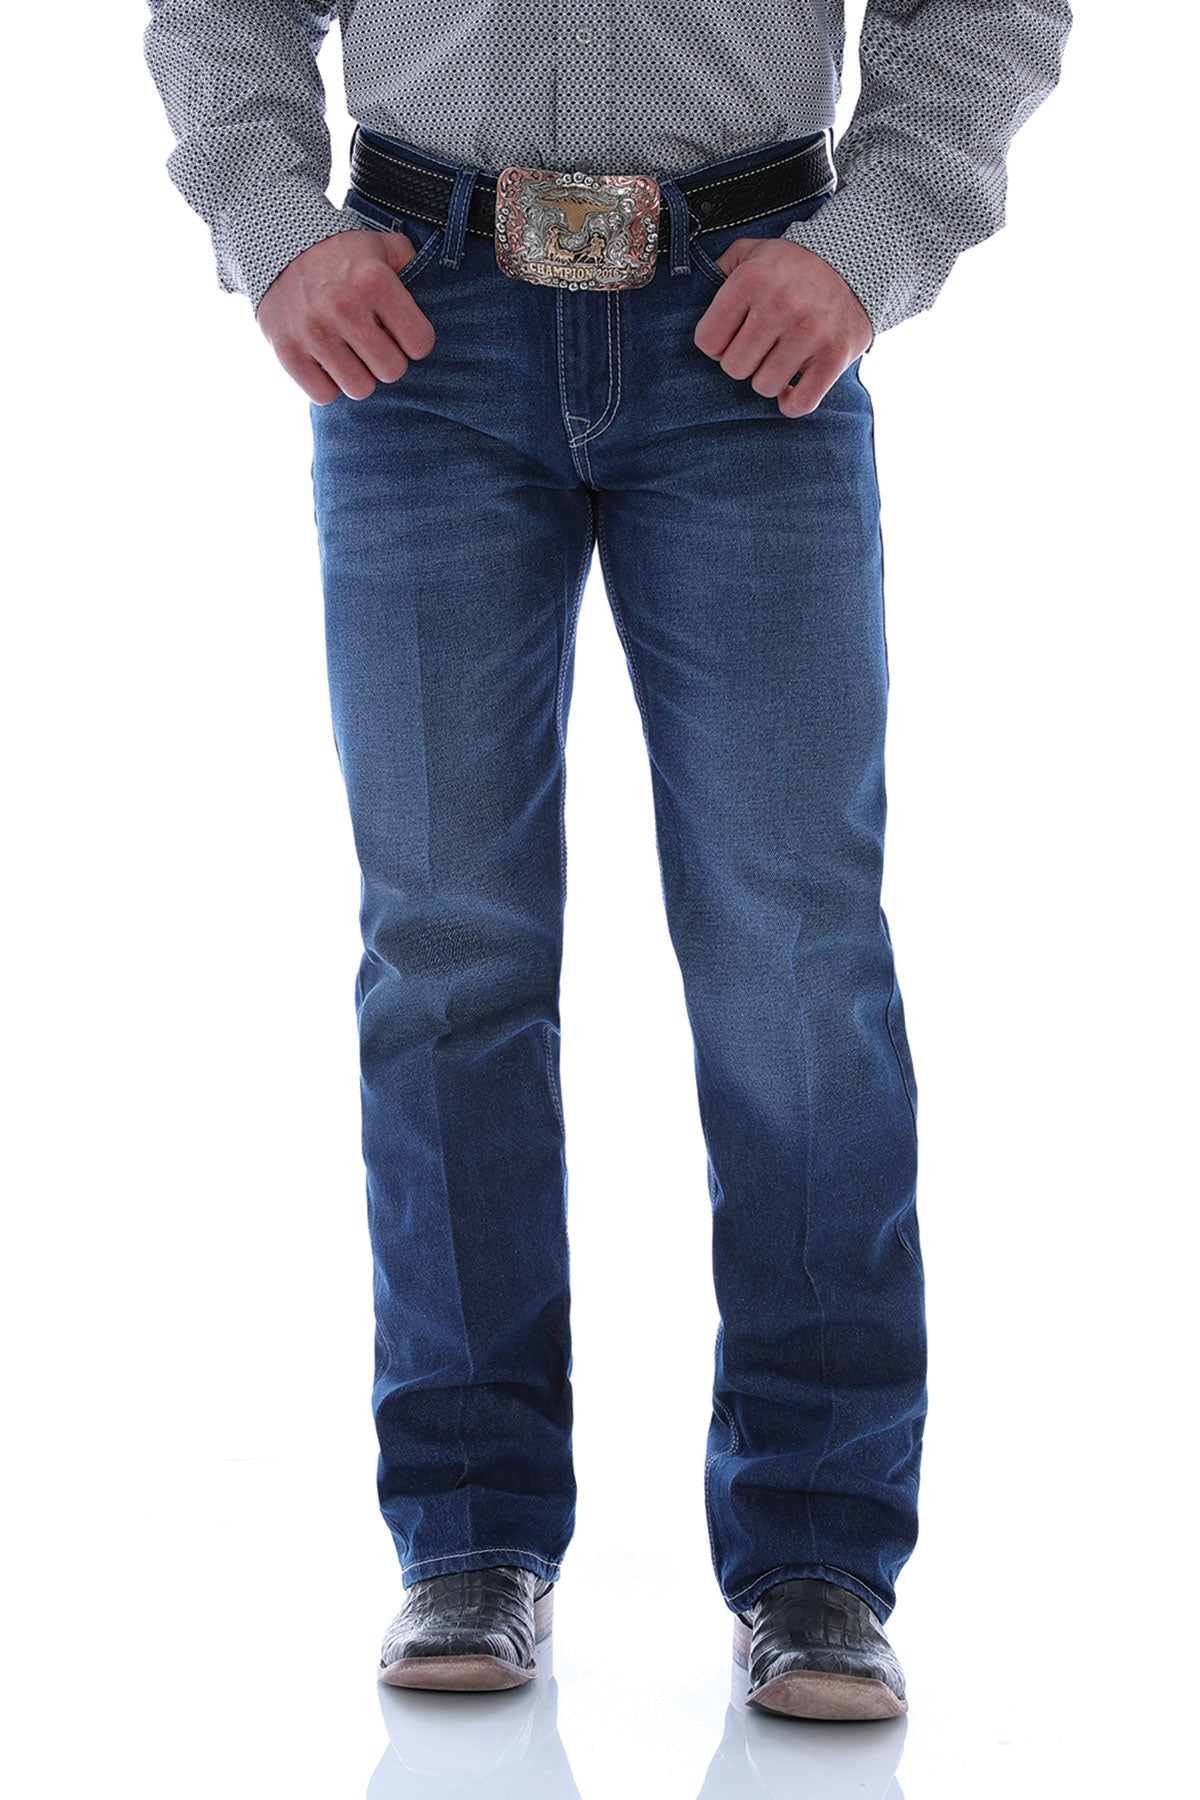 Men's Cinch Grant Jeans